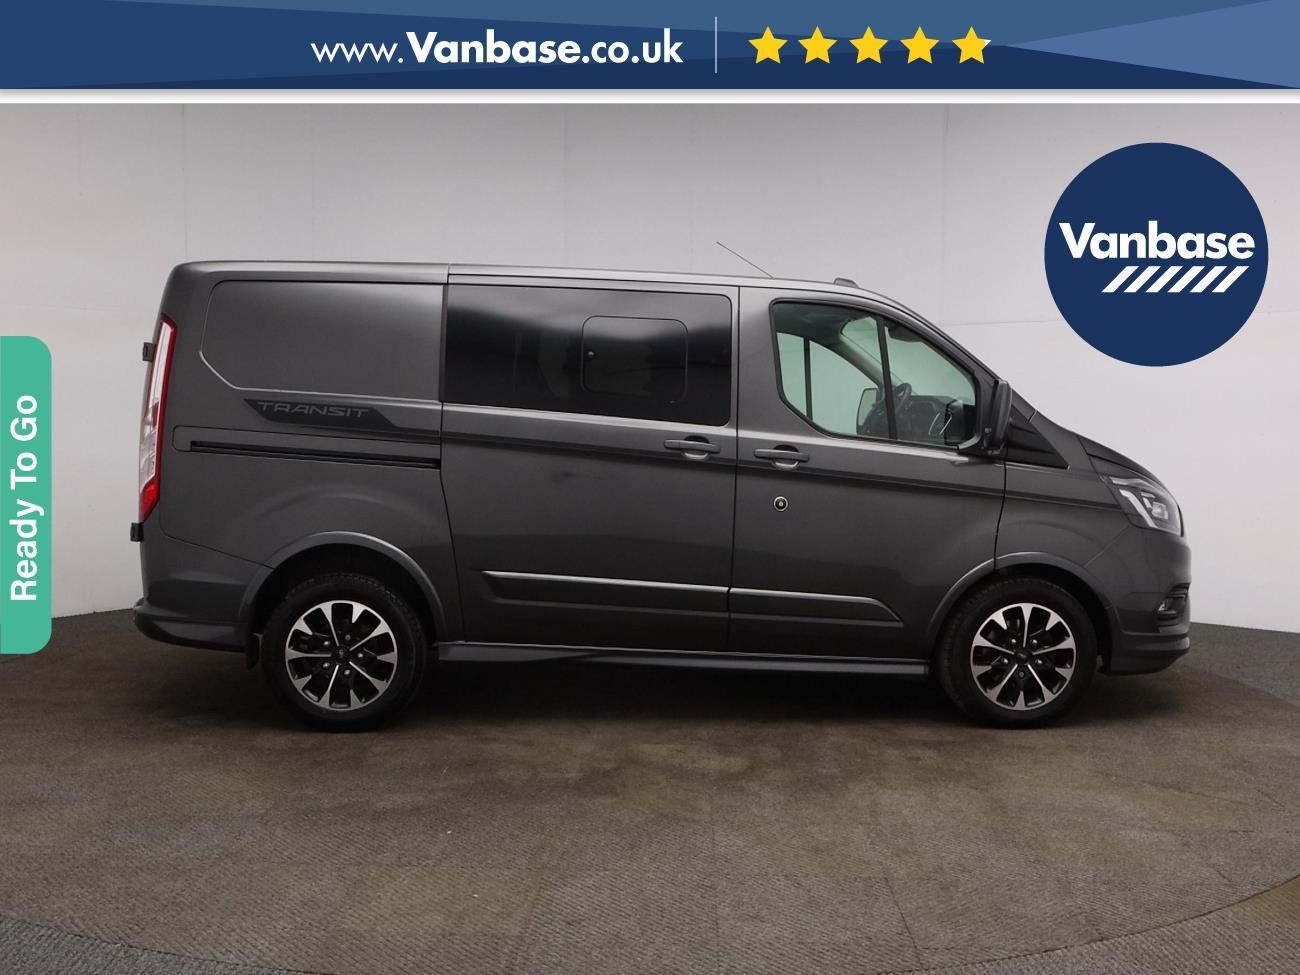 Used 5, 6 u0026 7 Seater Vans For Sale - Cheap Finance | Vanbase